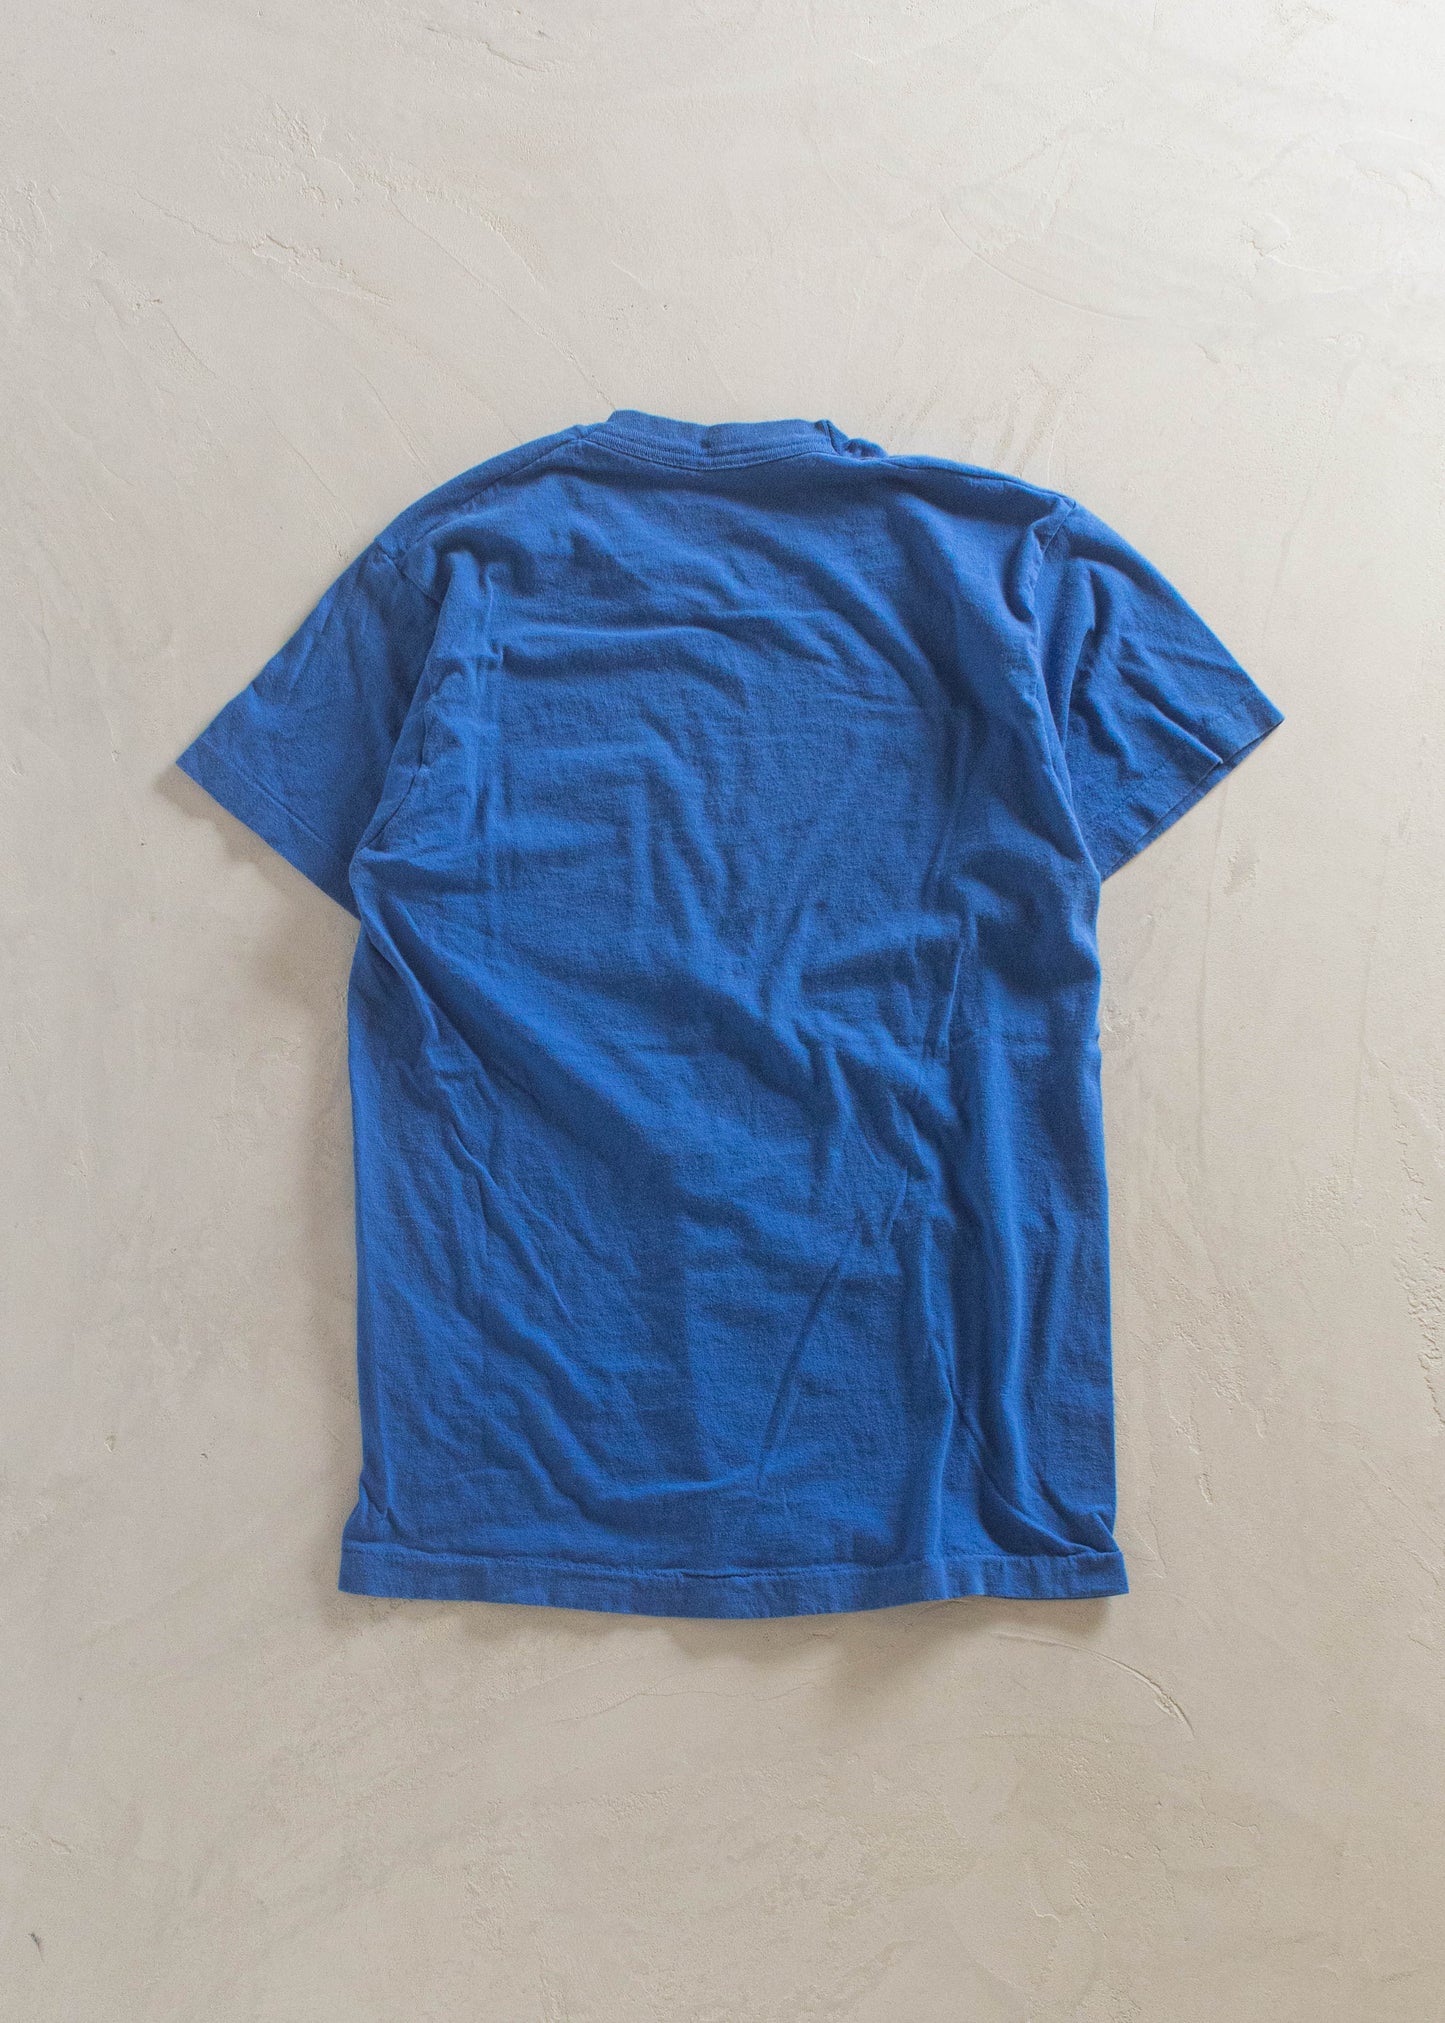 1980s Selvedge Pocket T-Shirt Size S/M